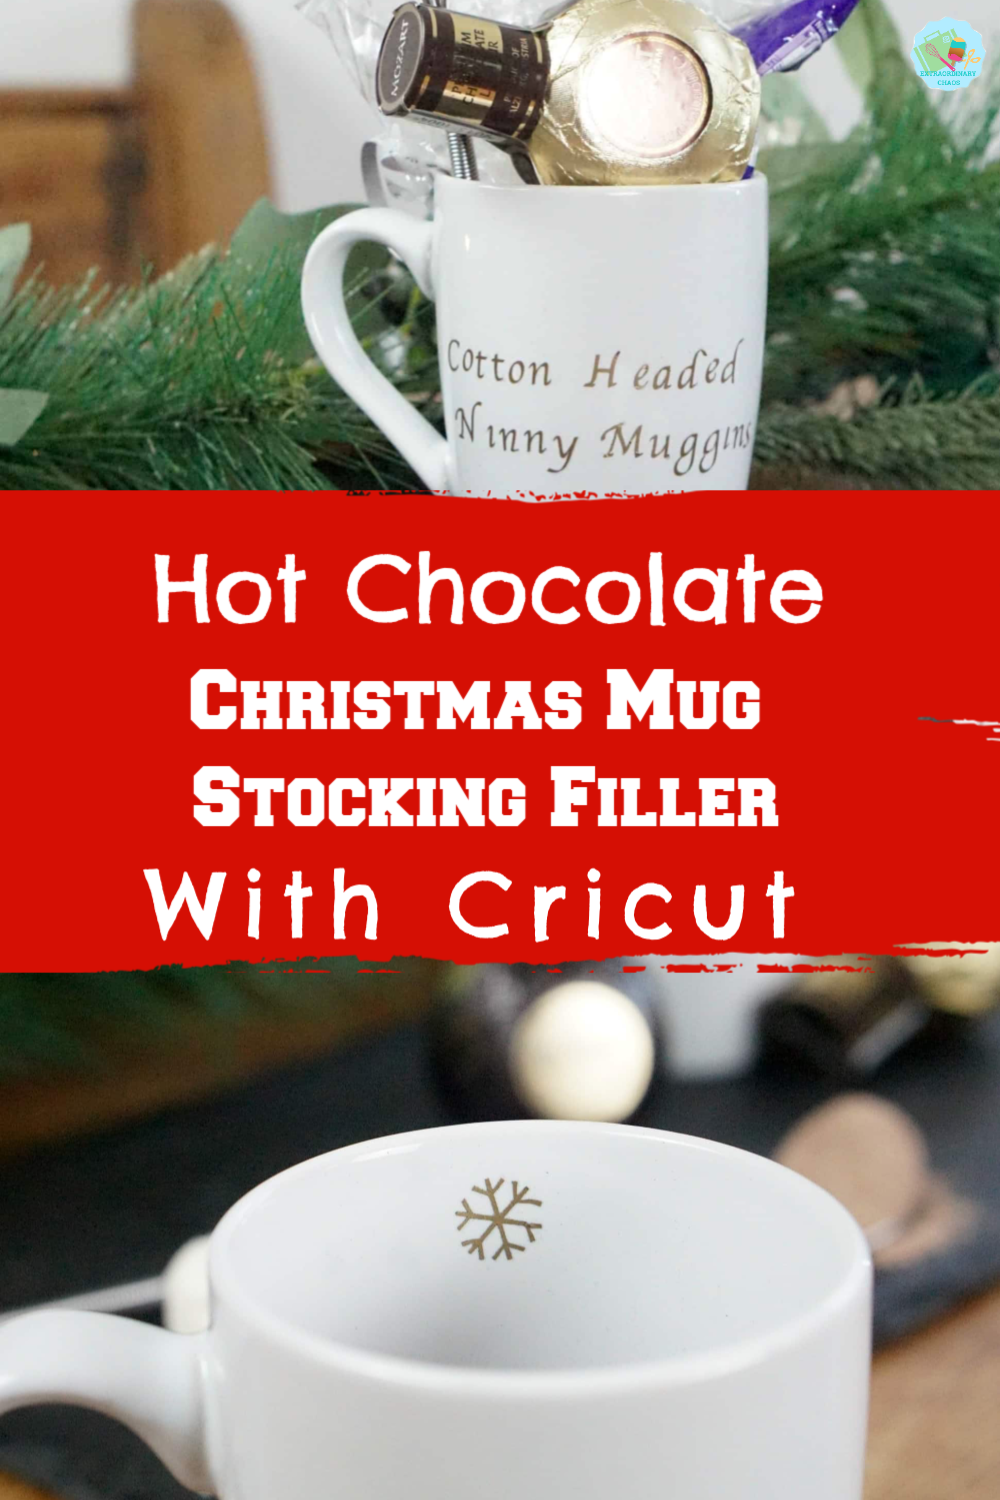 Hot chocolate mug Christmas stocking filler Gift With Cricut